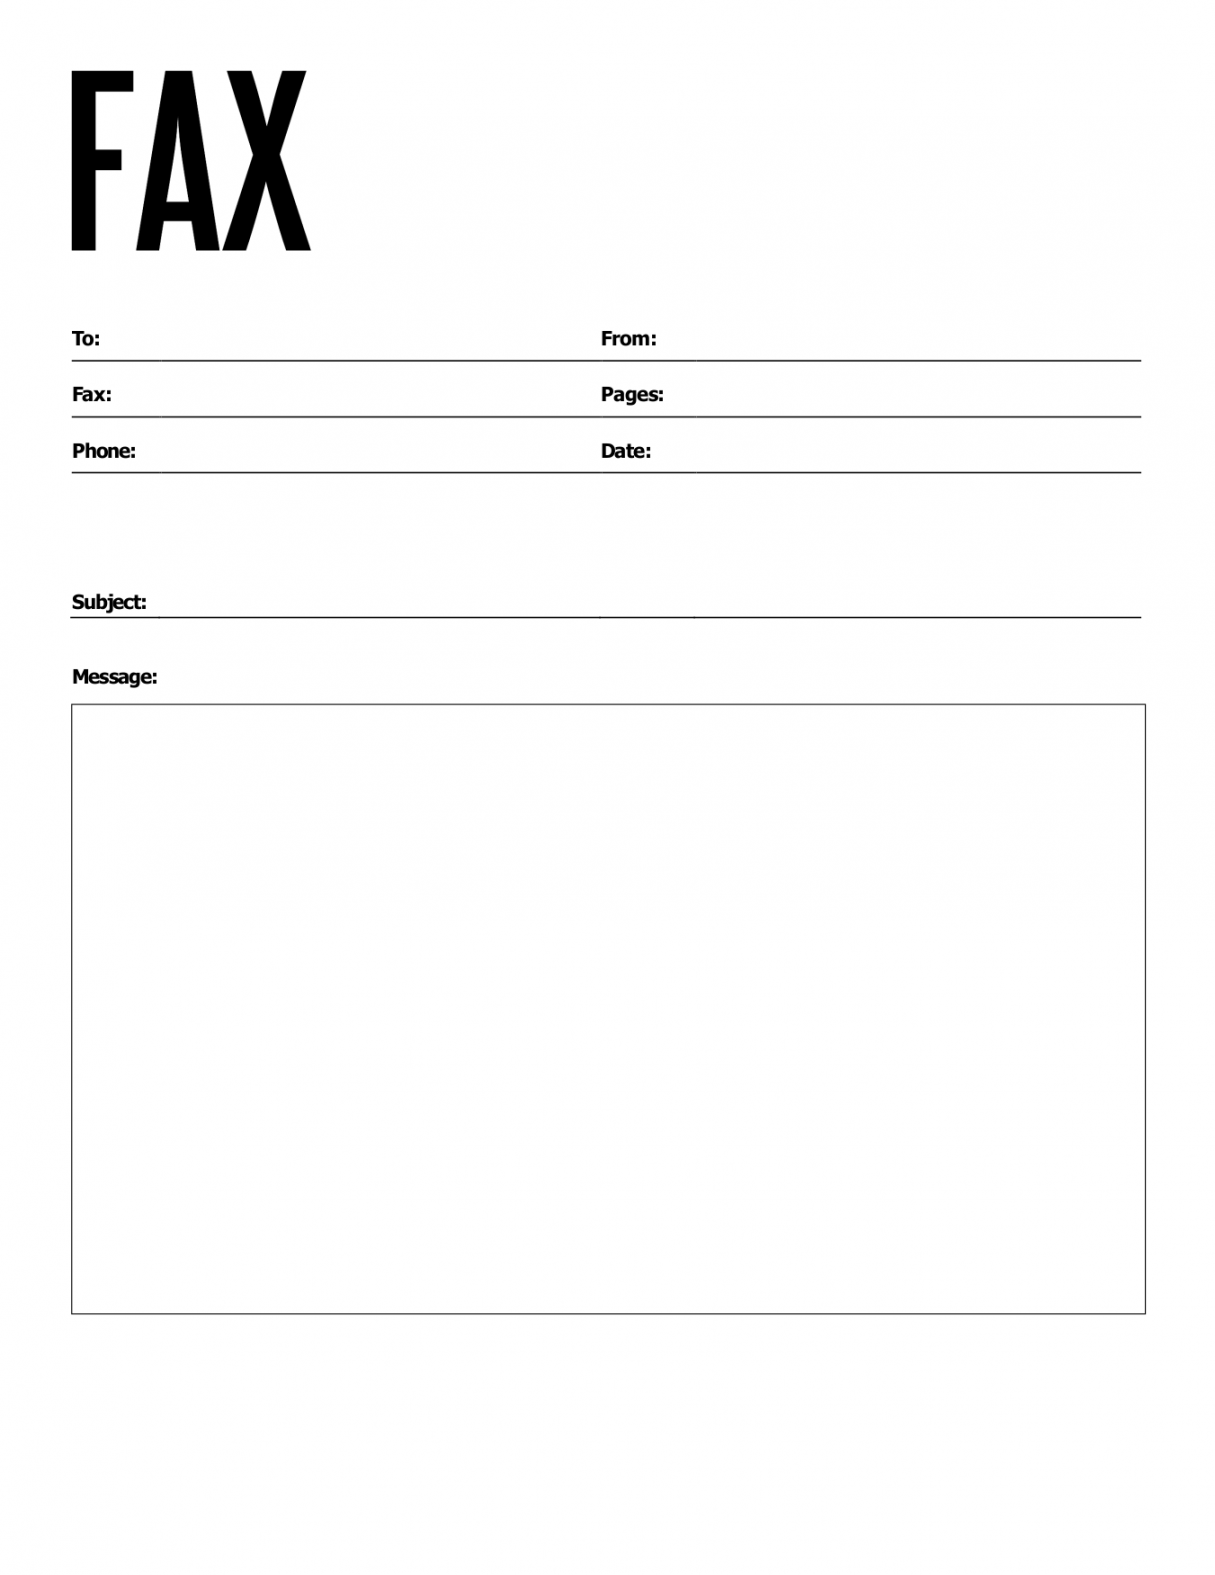 Free Printable Fax Cover Sheet - Printable - Free Fax Cover Sheets  FaxBurner